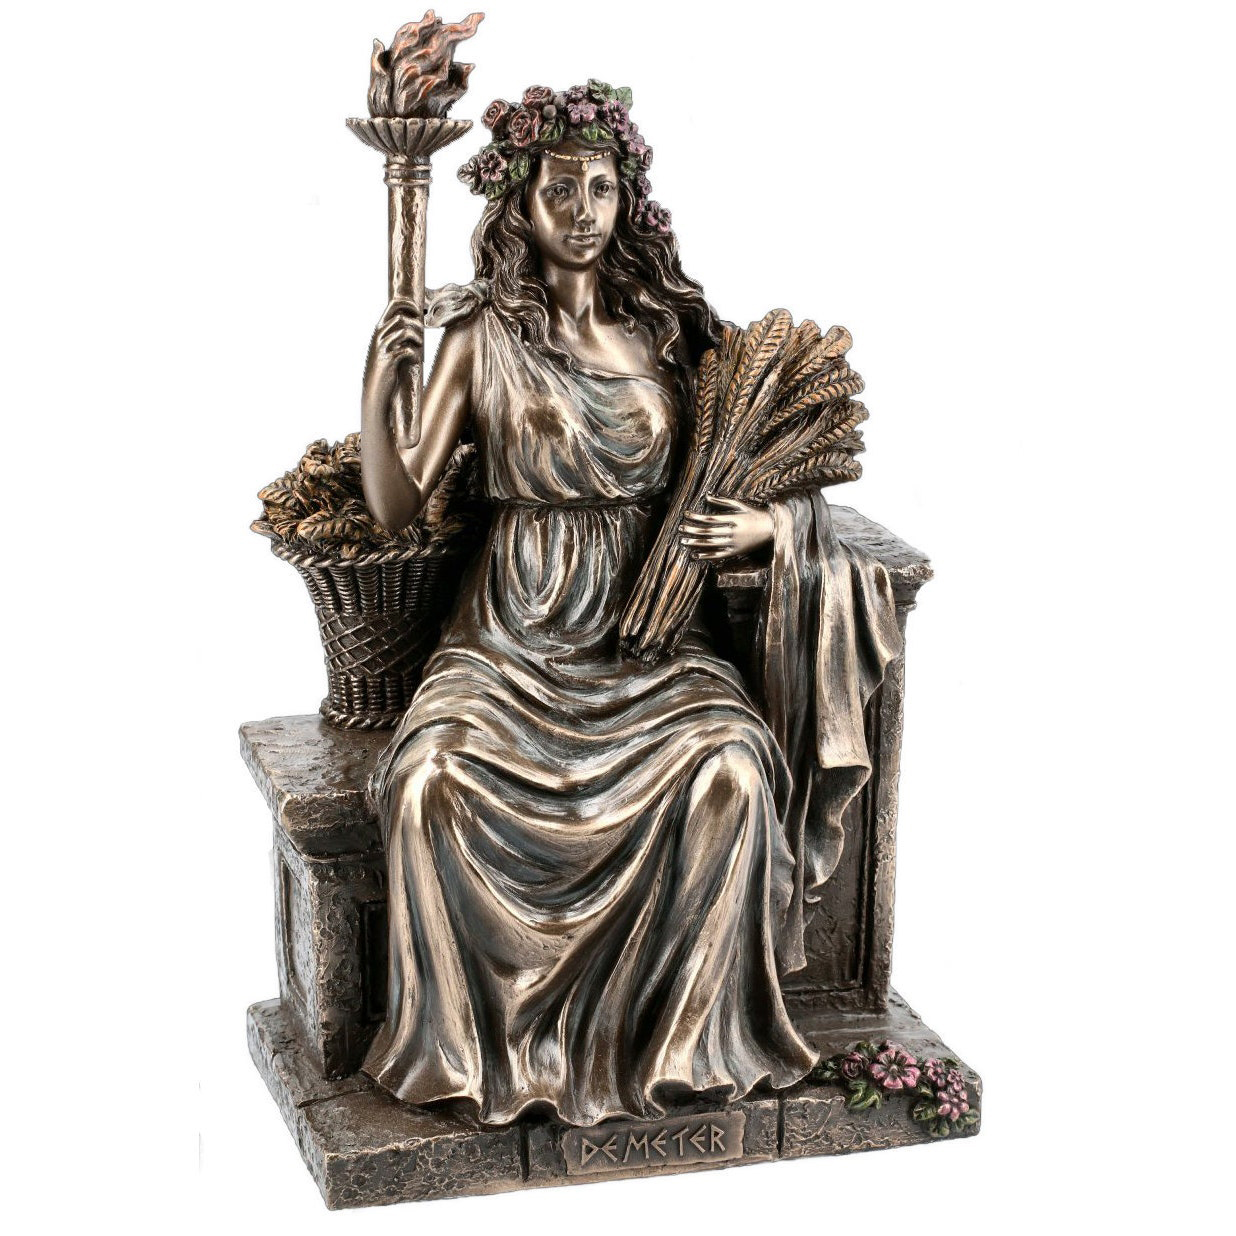 Demeter Statue for Sale